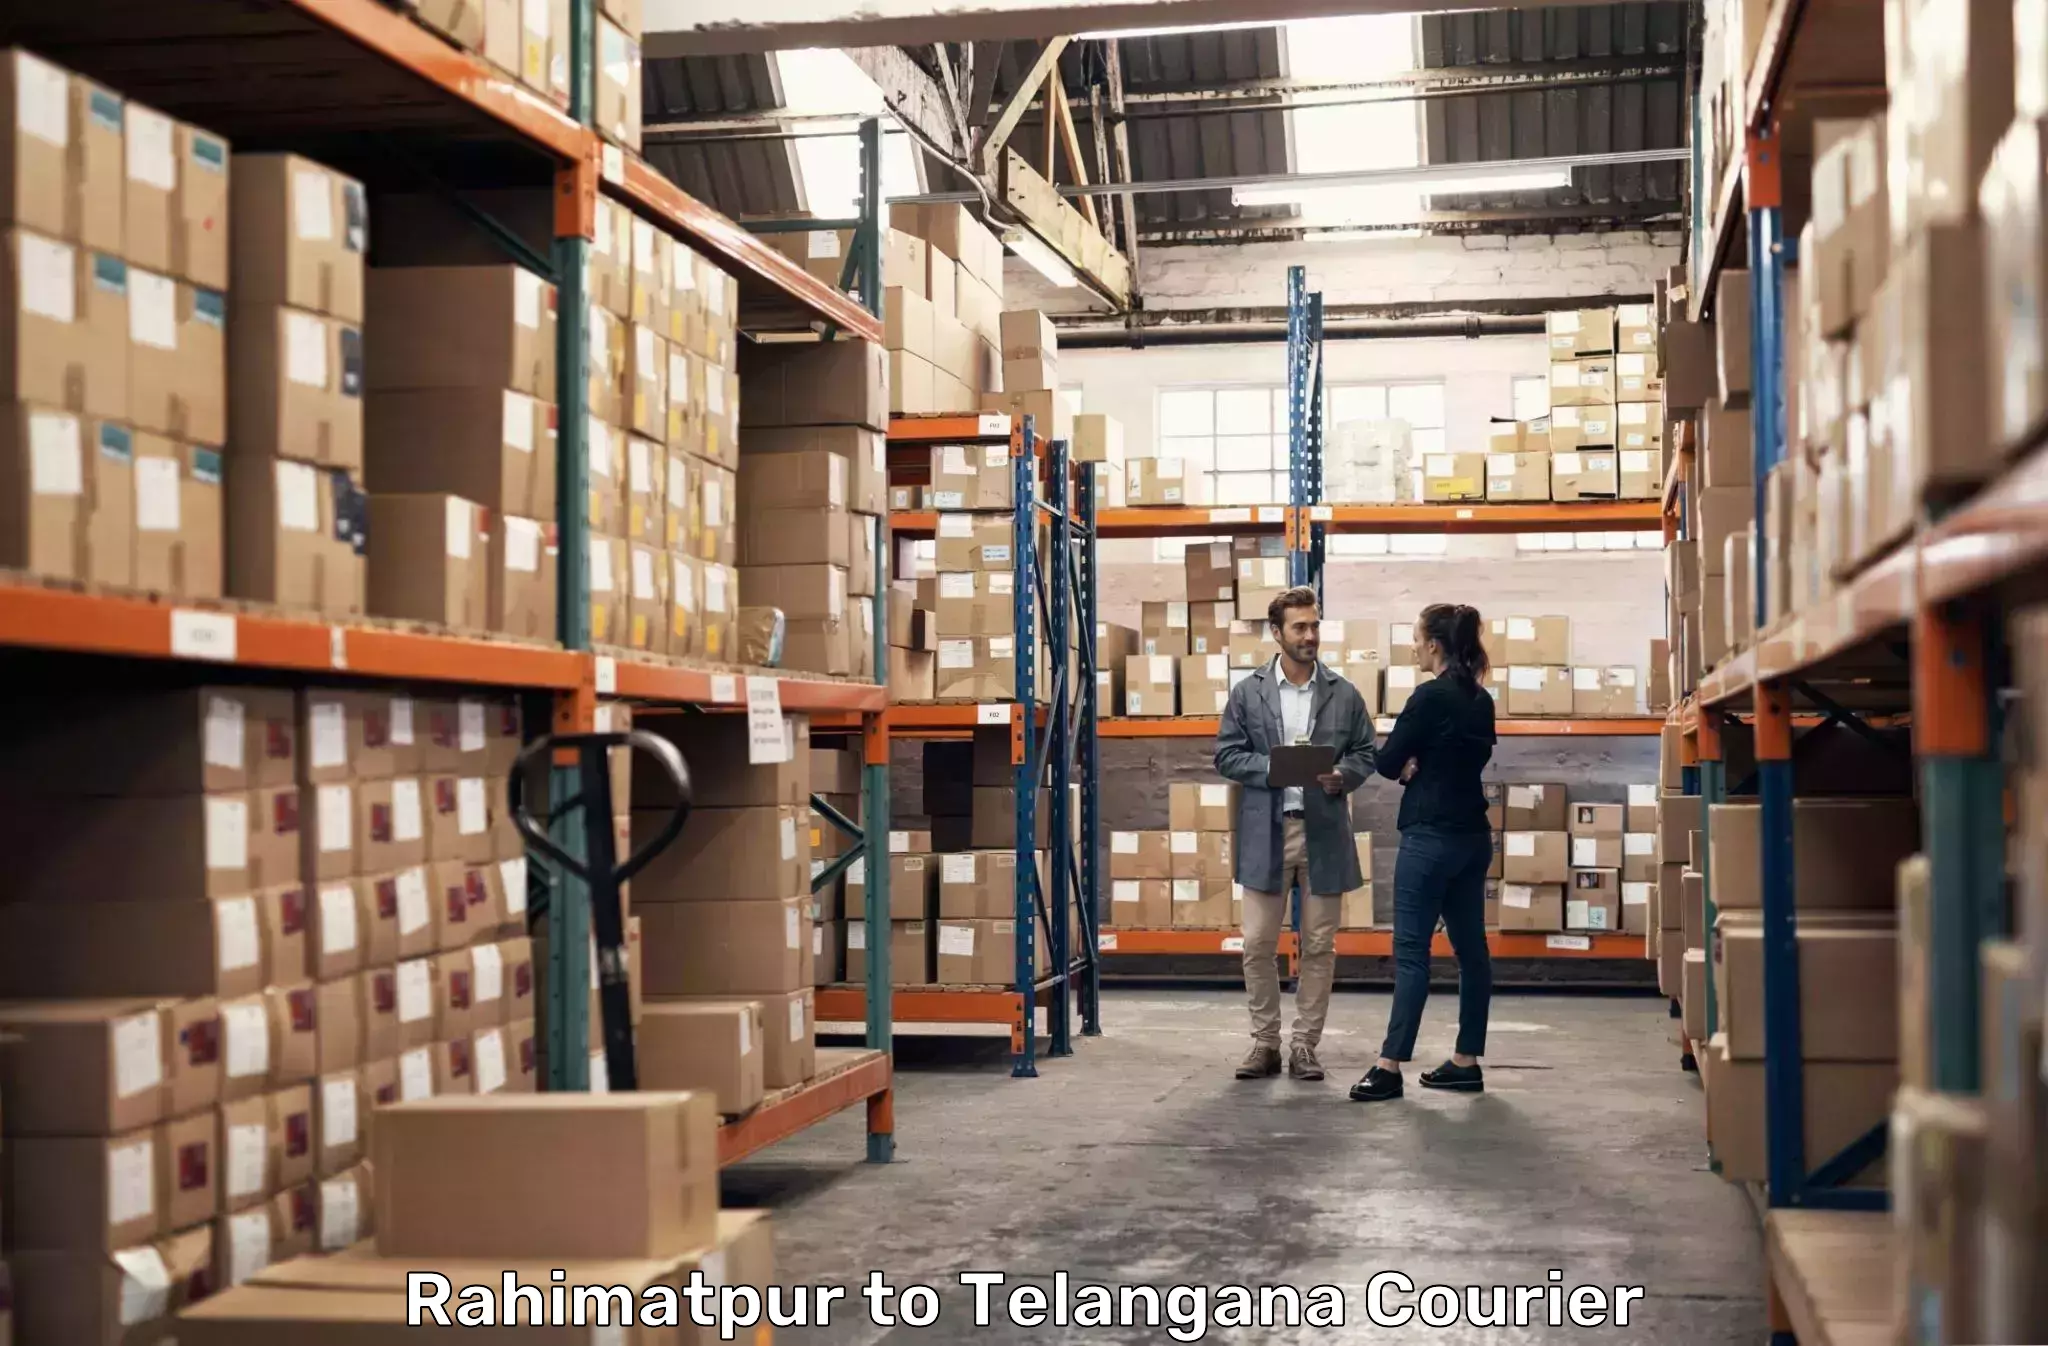 Bulk courier orders Rahimatpur to Vikarabad